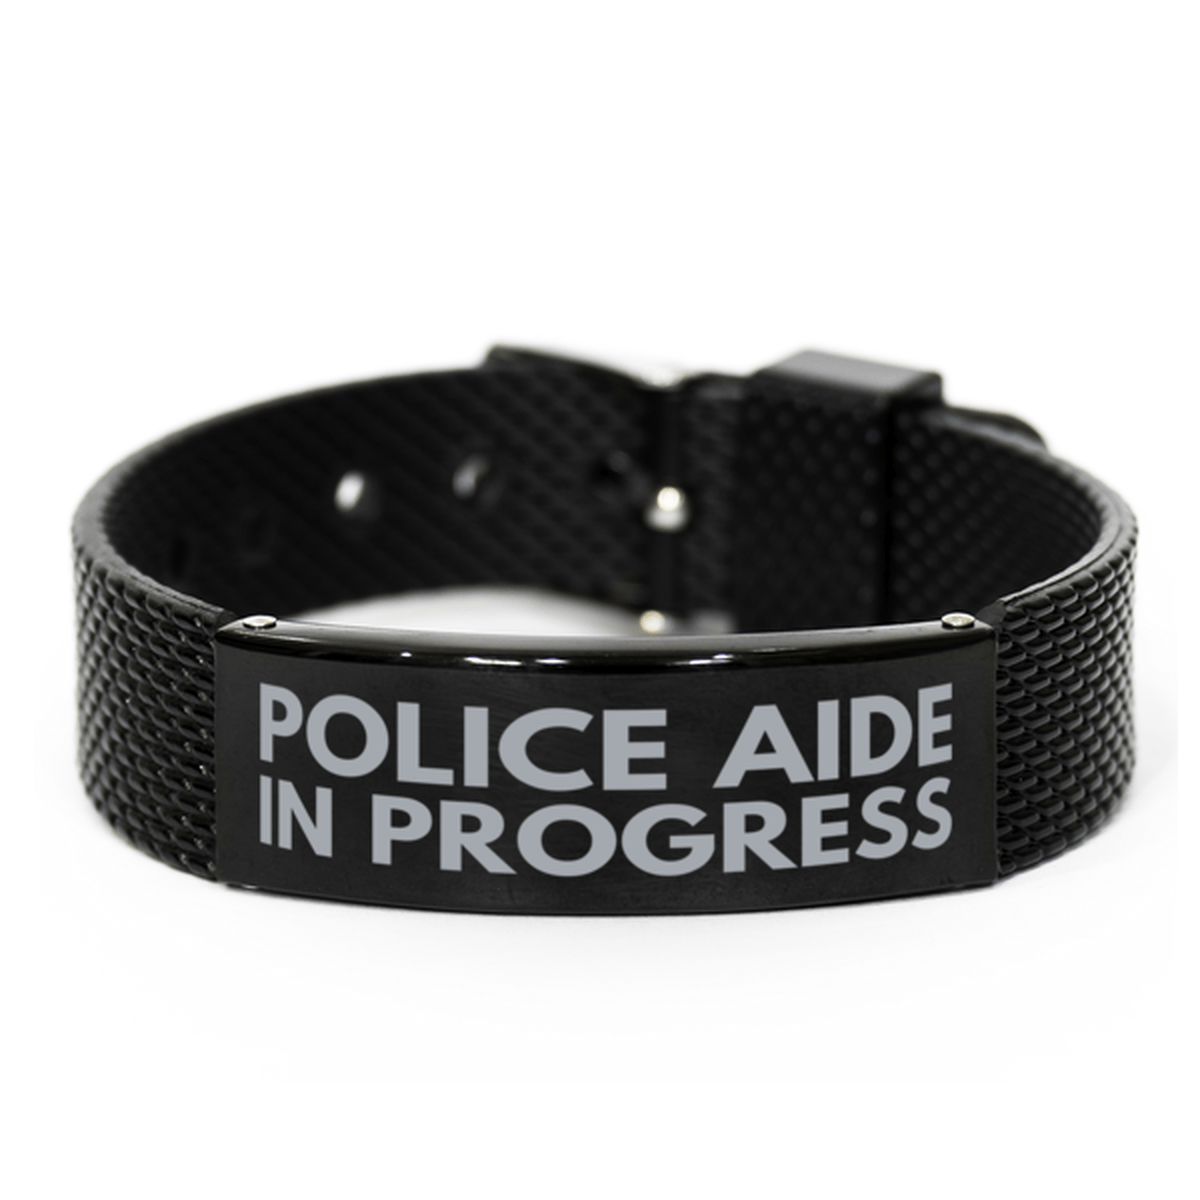 Inspirational Police Aide Black Shark Mesh Bracelet, Police Aide In Progress, Best Graduation Gifts for Students